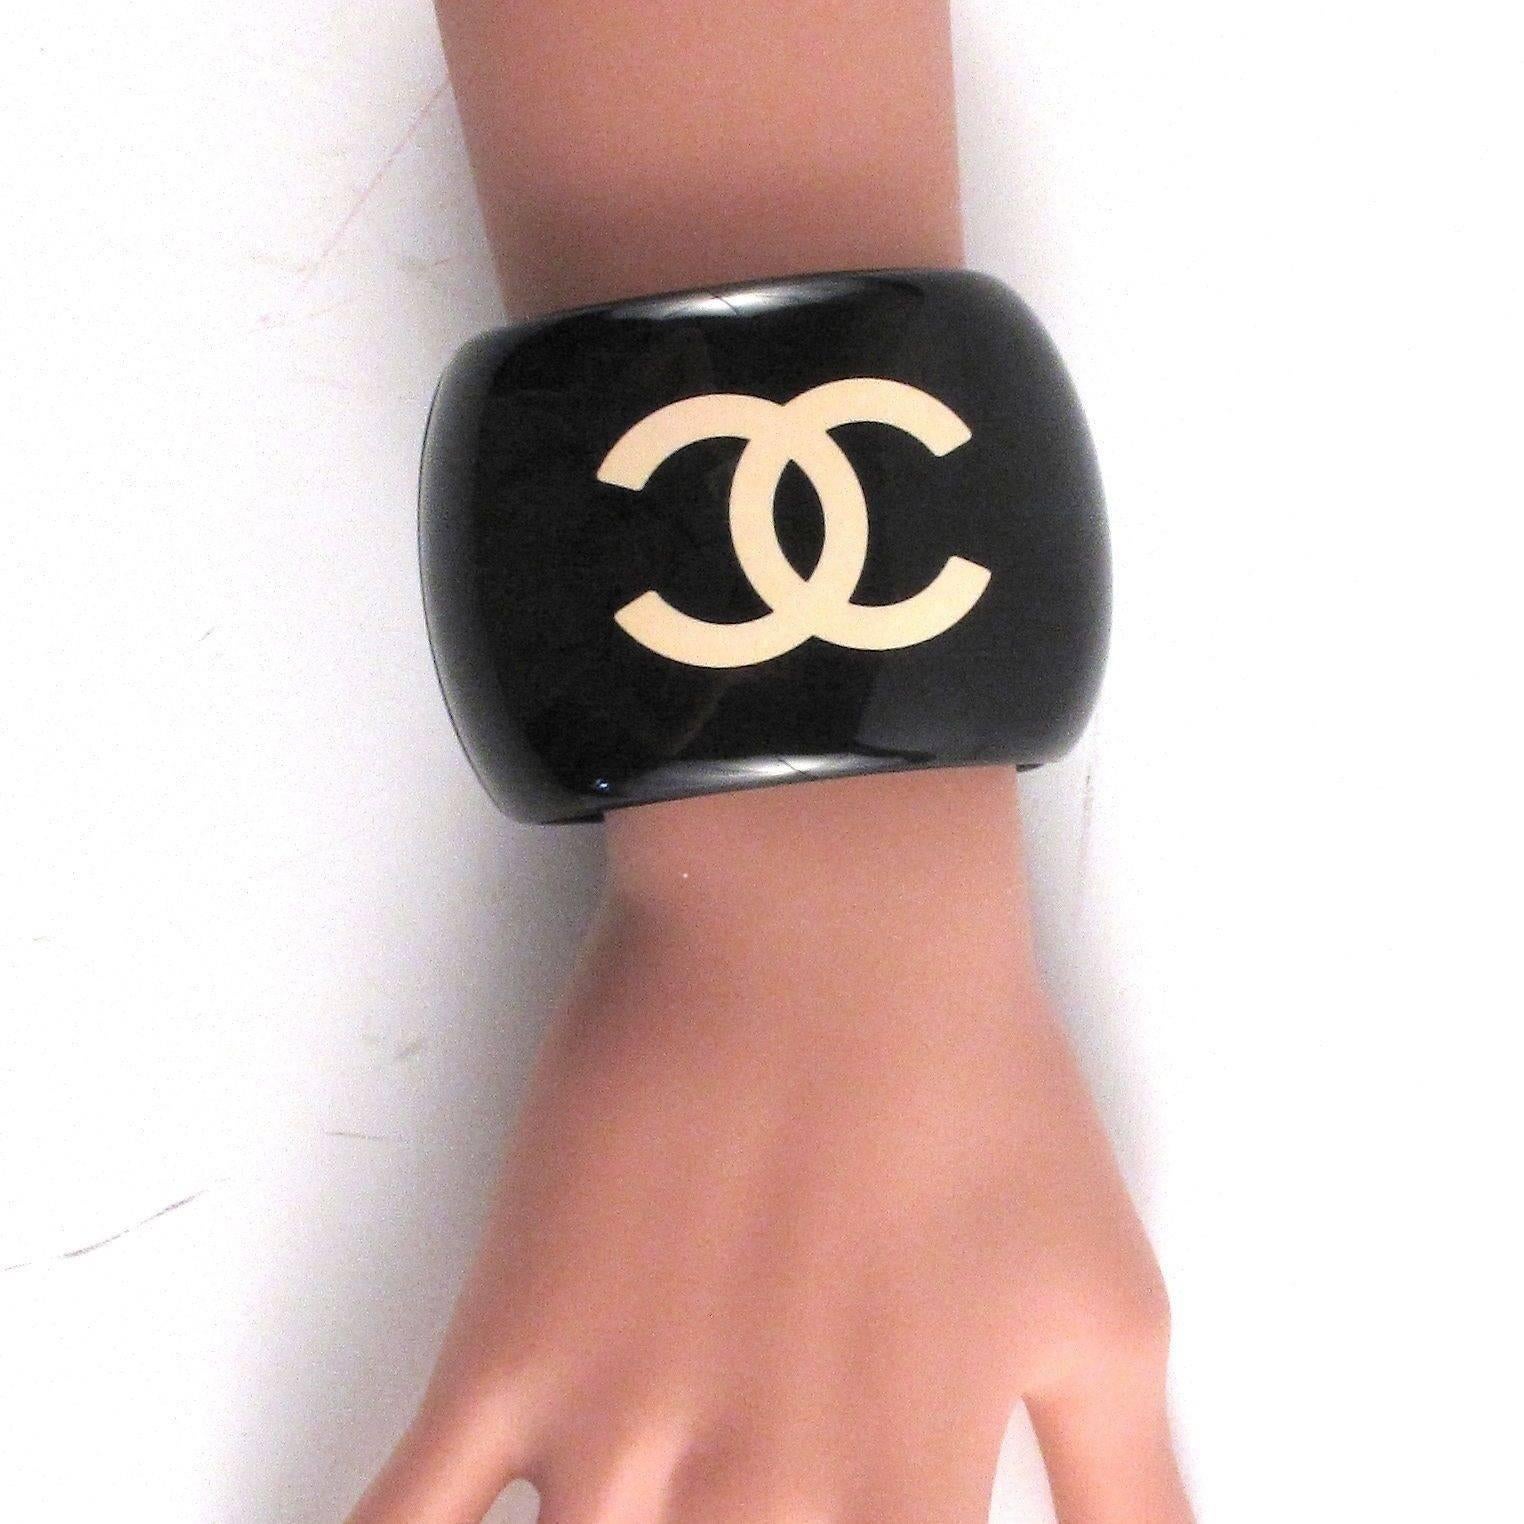 Chanel - Cuff Bracelet

Color: Black / White

Material: Resin

------------------------------------------------------------
 
Details:

- CC logo at front

- camellia motif at back

- gold tone hardware

- stamped 05P

- item #